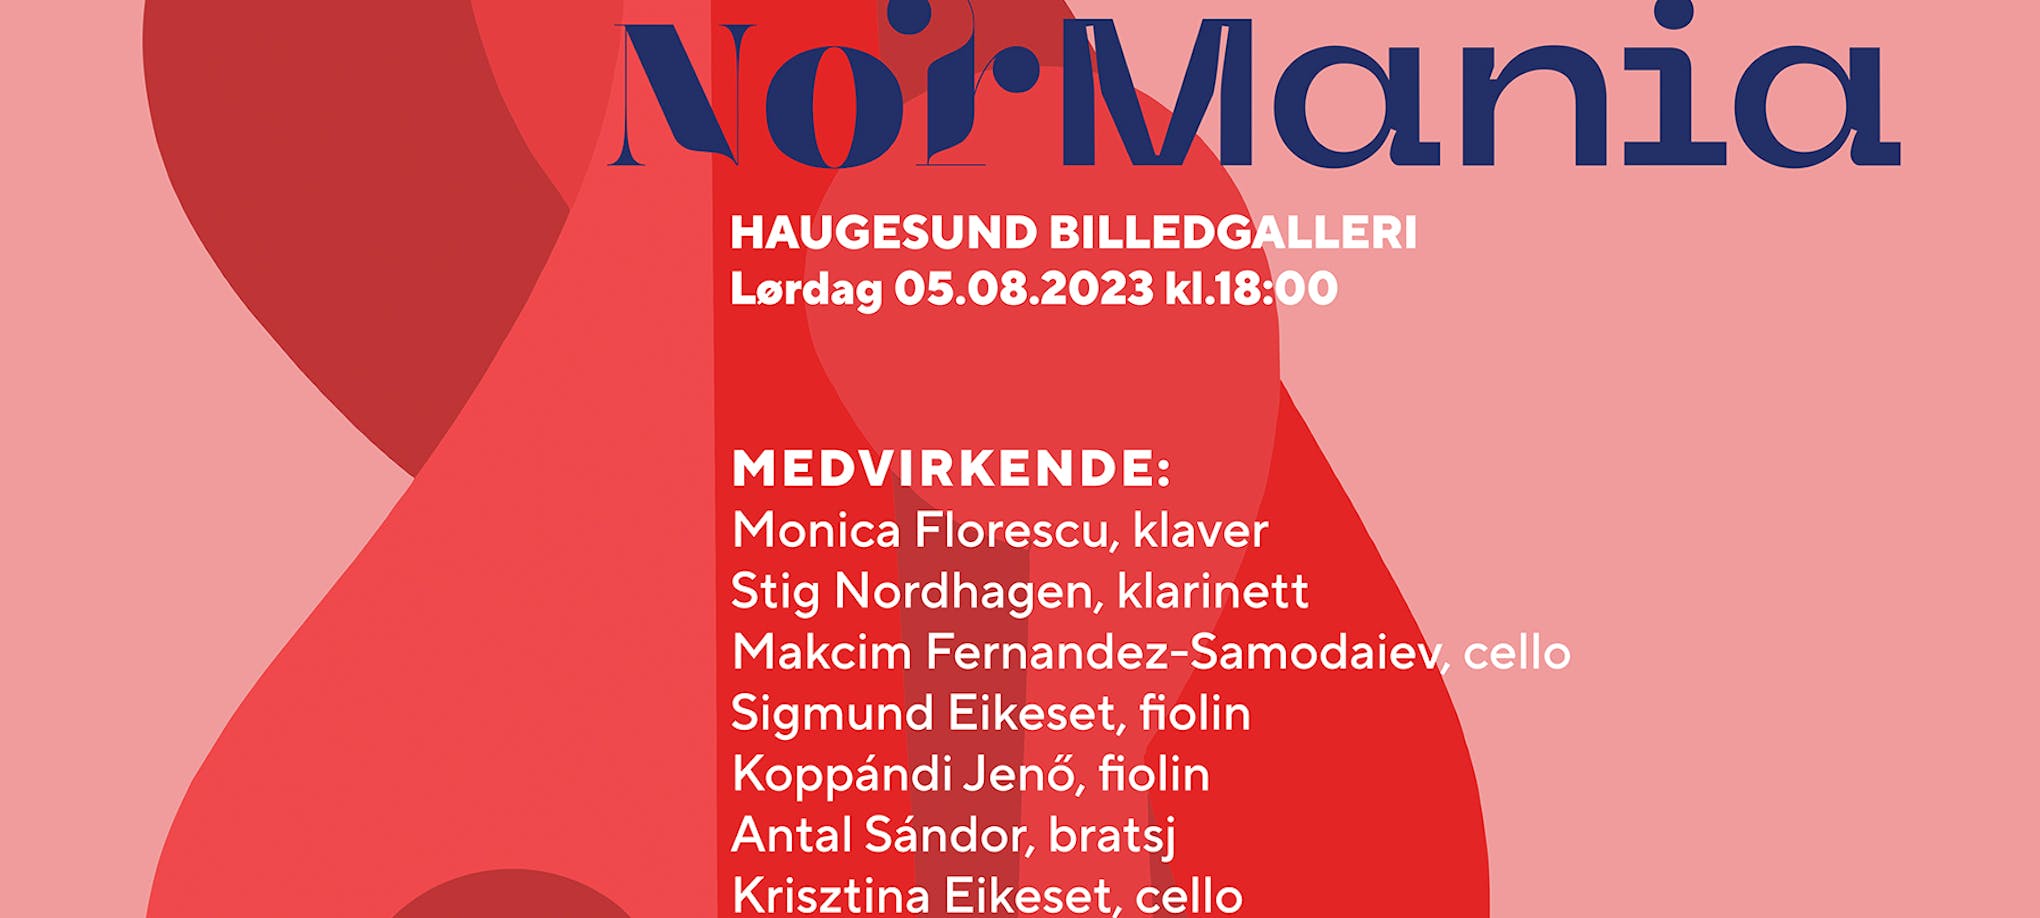 Til digital bruk poster general RoWay-NorMania_50x70cm 5mmBL_Haugesund_preview